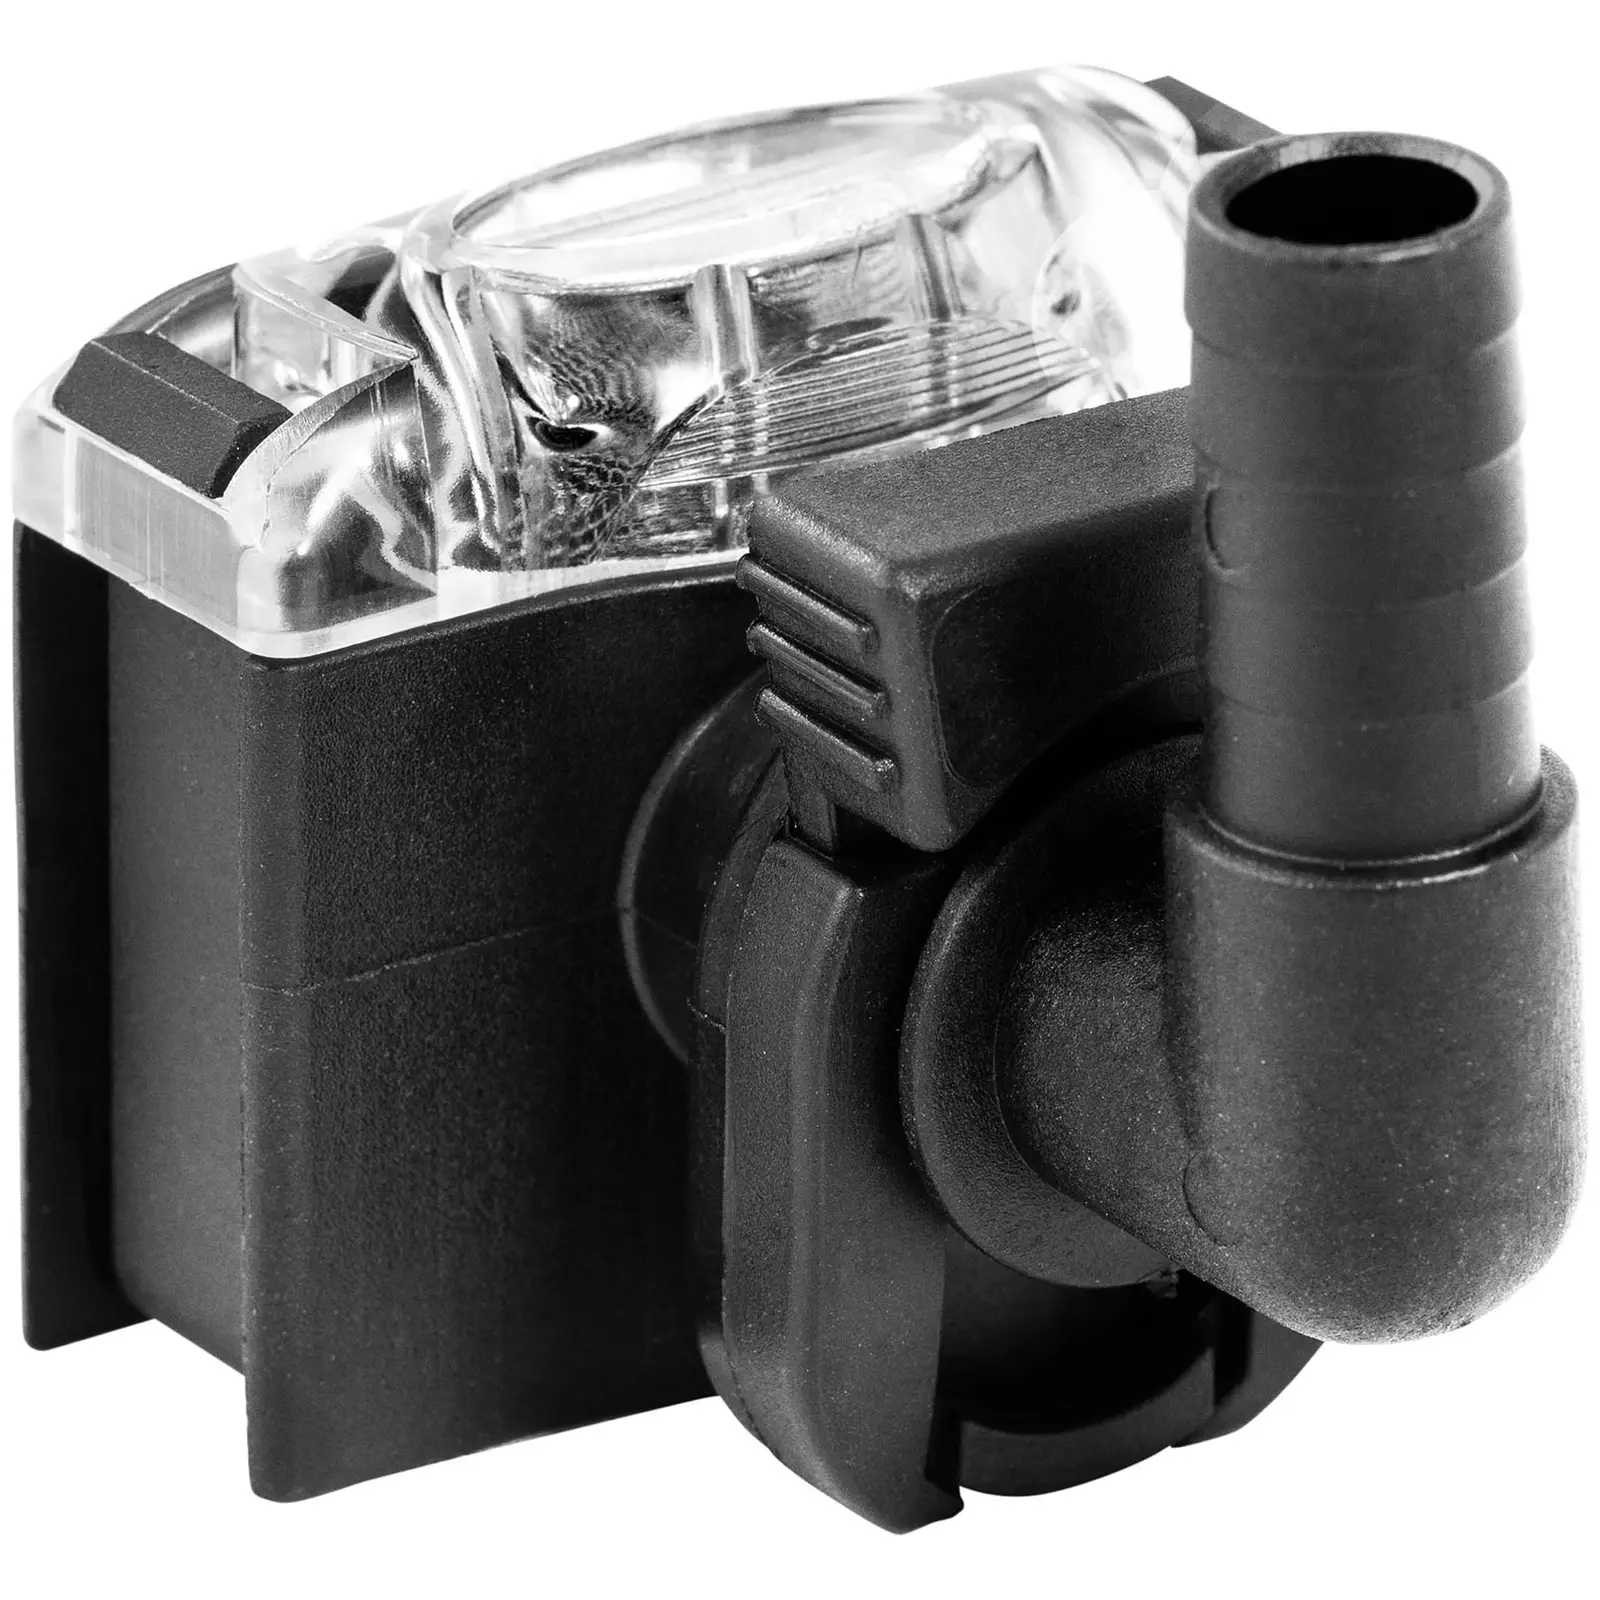 Pressure water pump with pressure switch - 12 V - 10 l/min - max. 60 °C - 1.2 bar